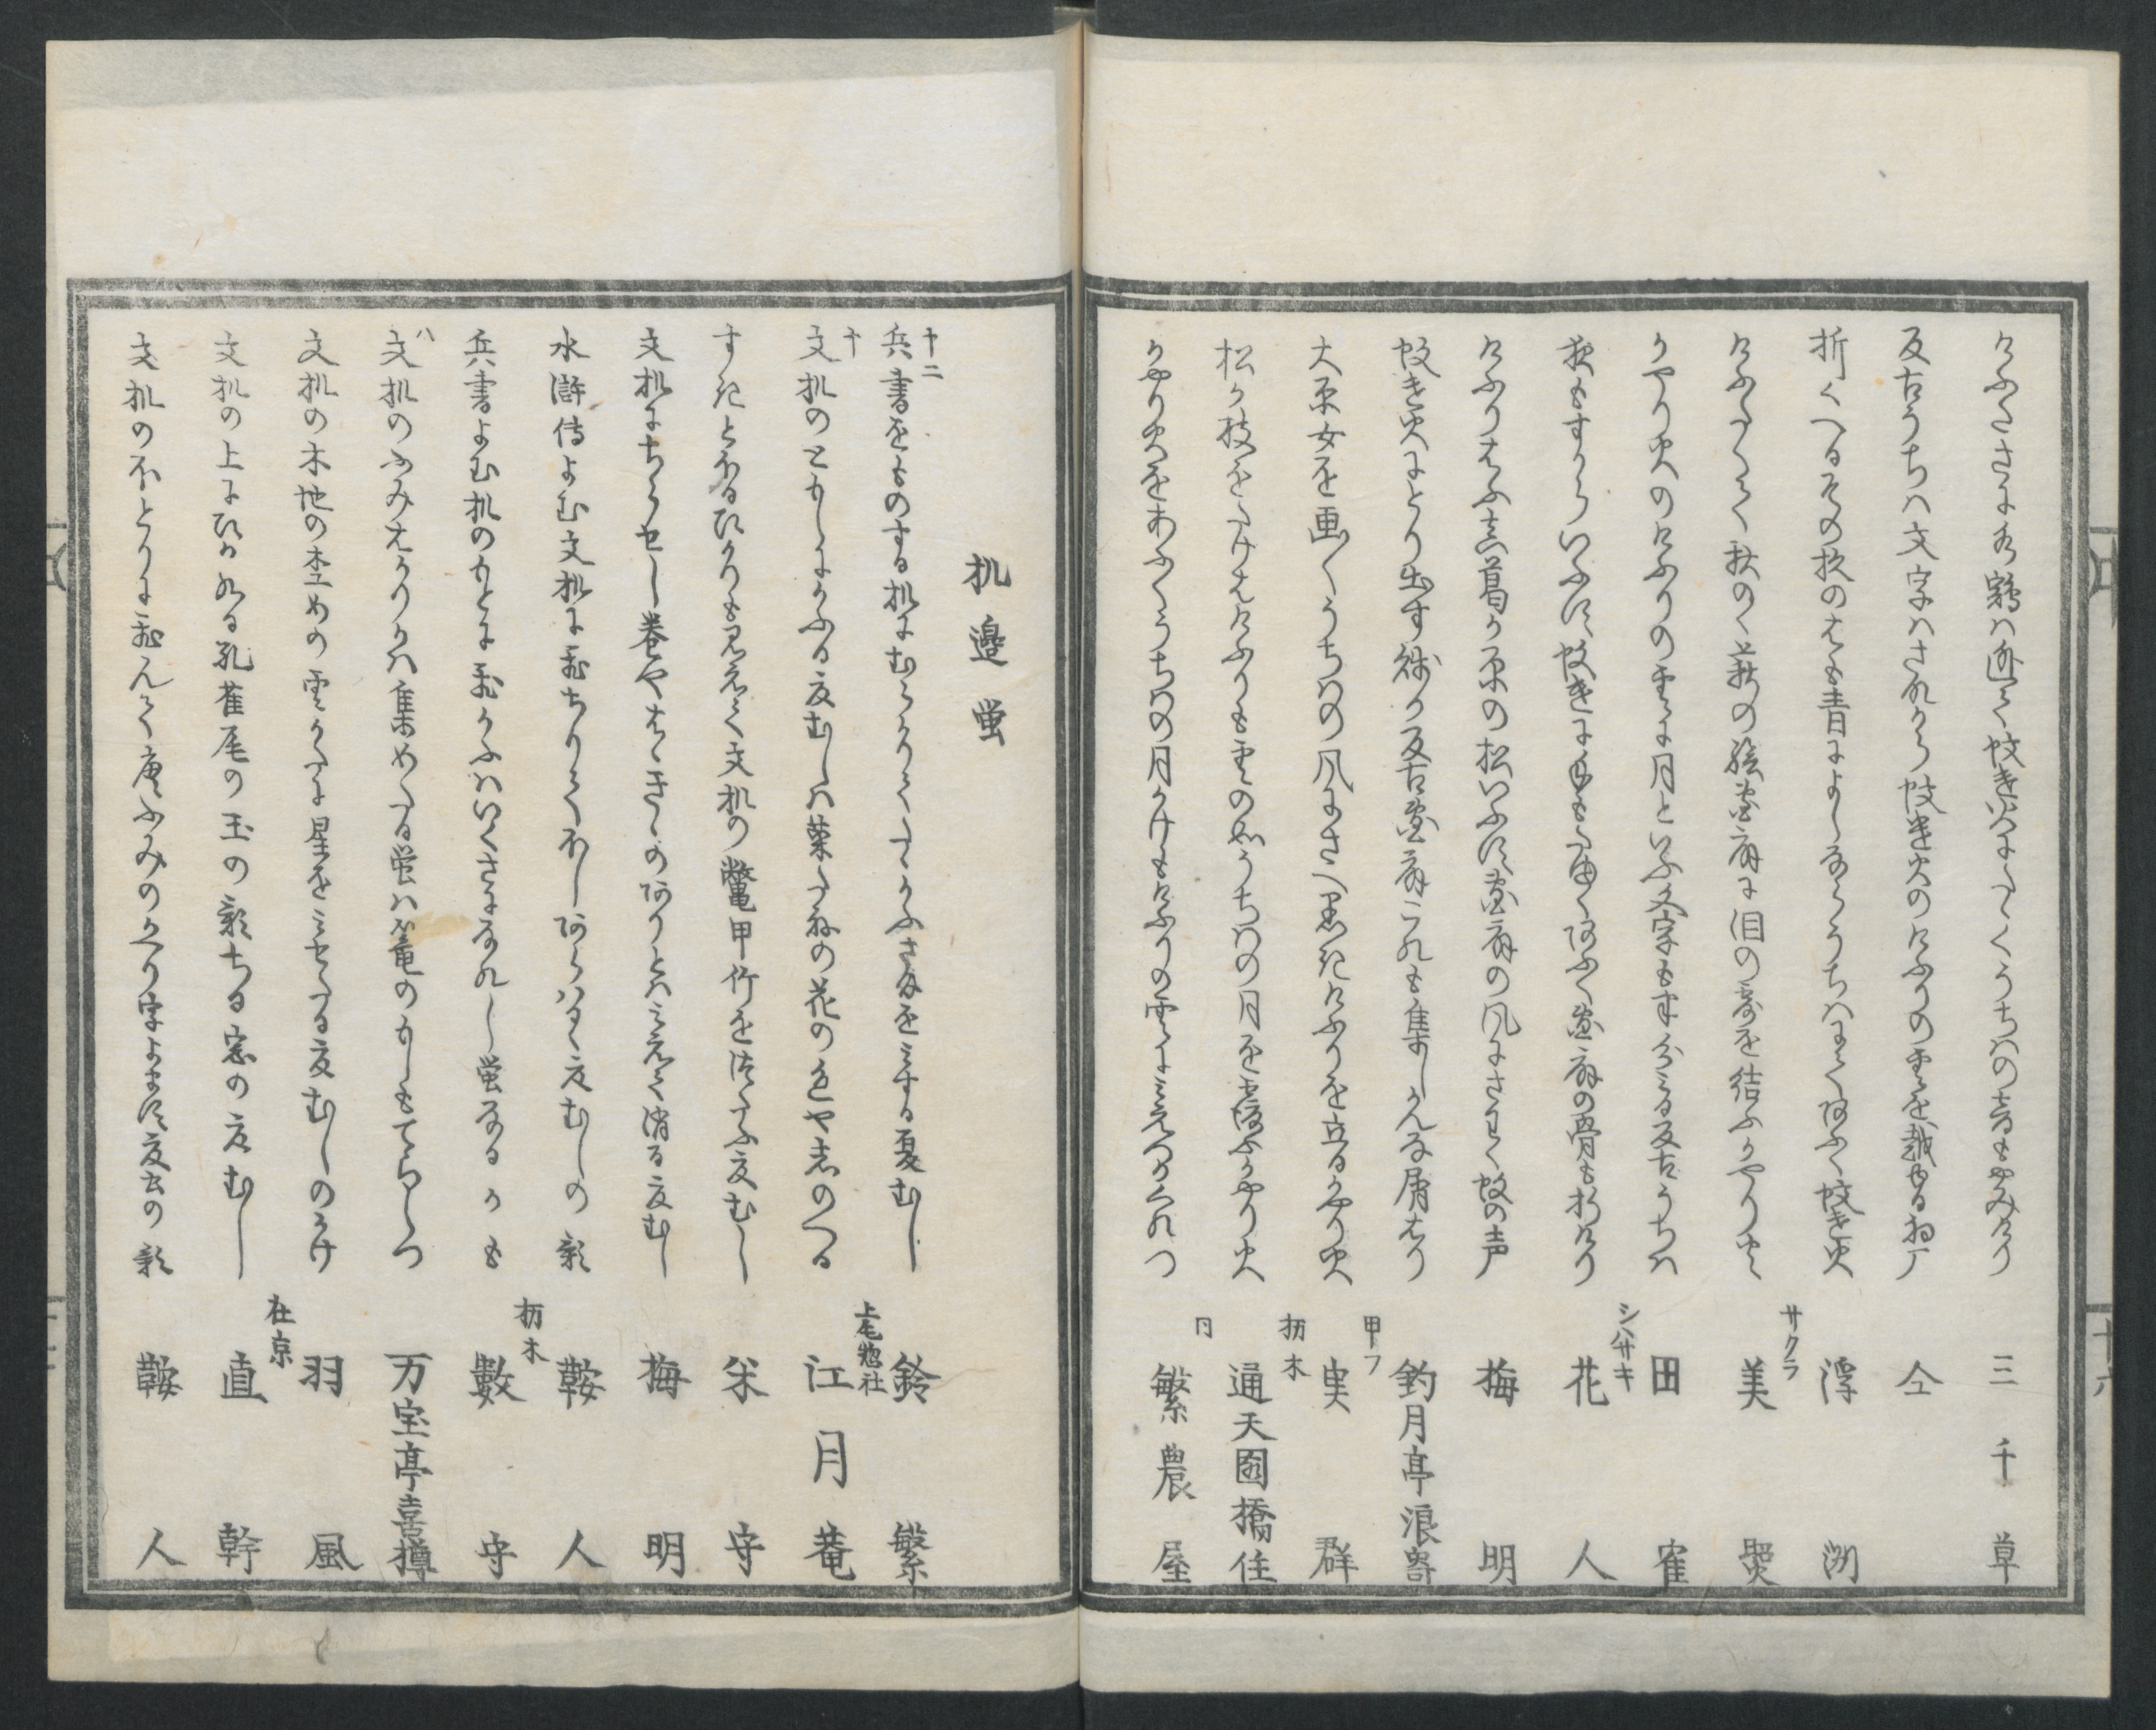 Utagawa Kuniyoshi Book Of Humorous Poems Japan Edo Period 1615 1868 The Metropolitan Museum Of Art